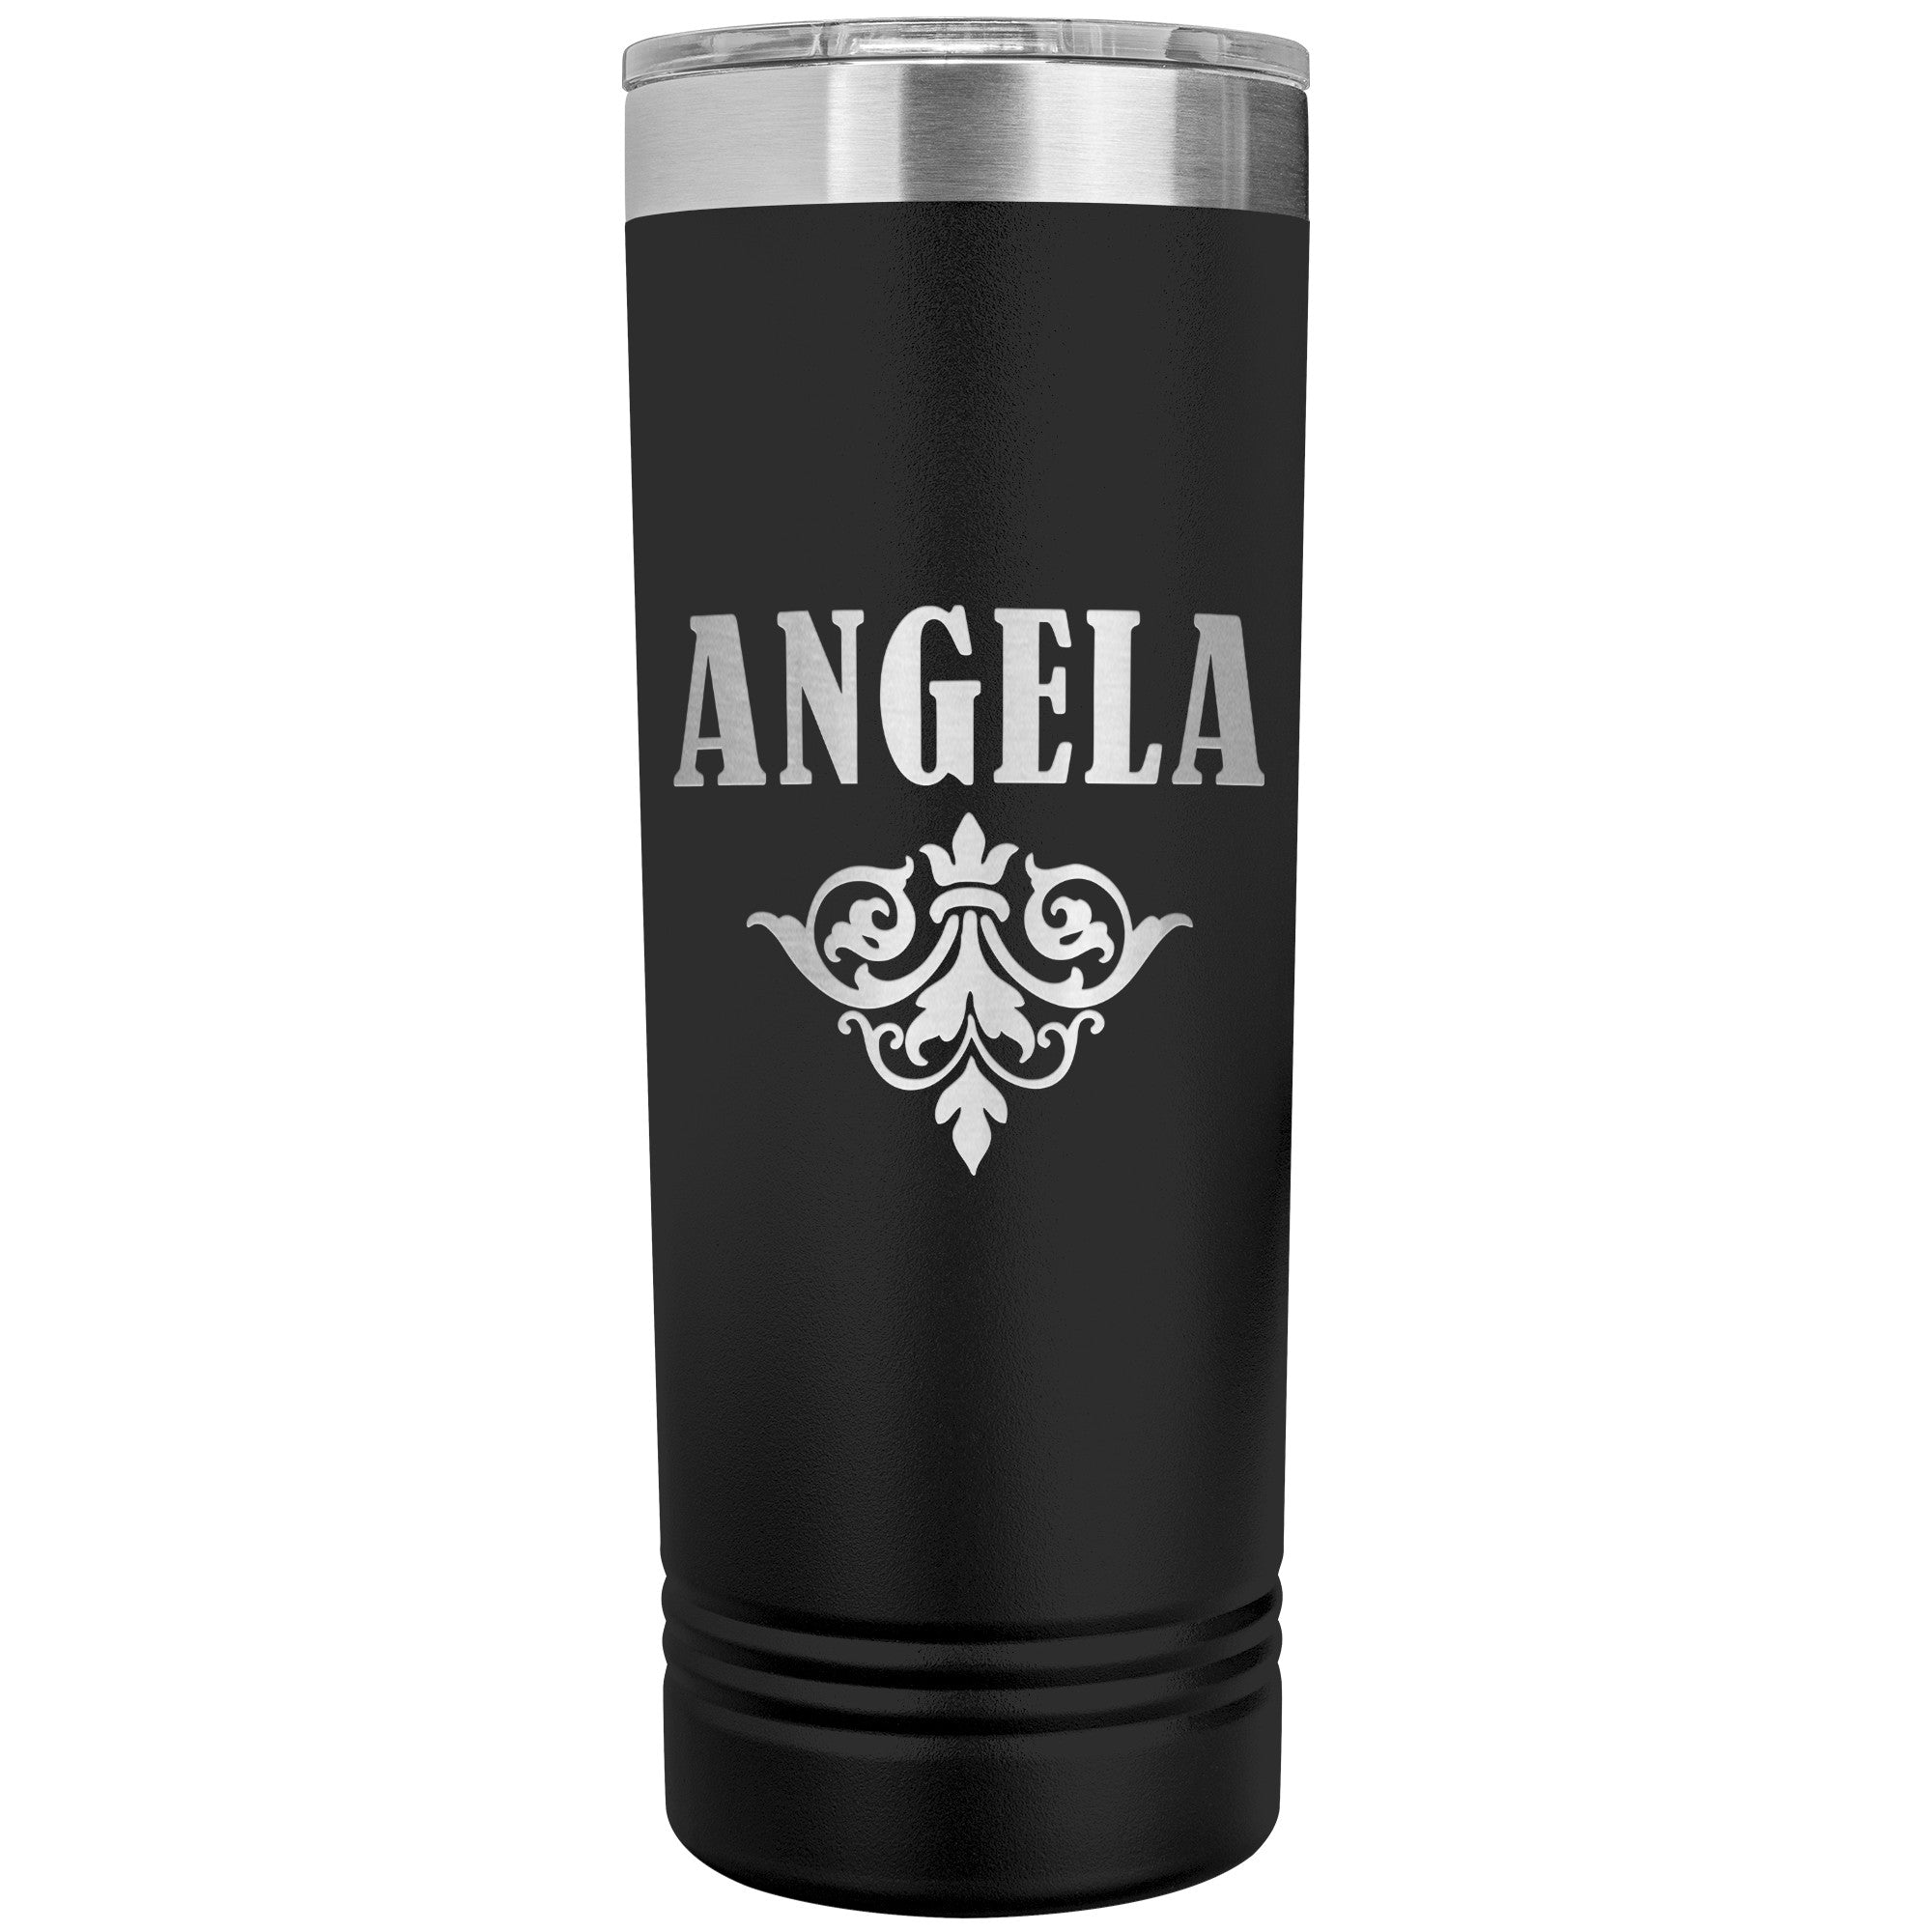 Angela v01 - 22oz Insulated Skinny Tumbler